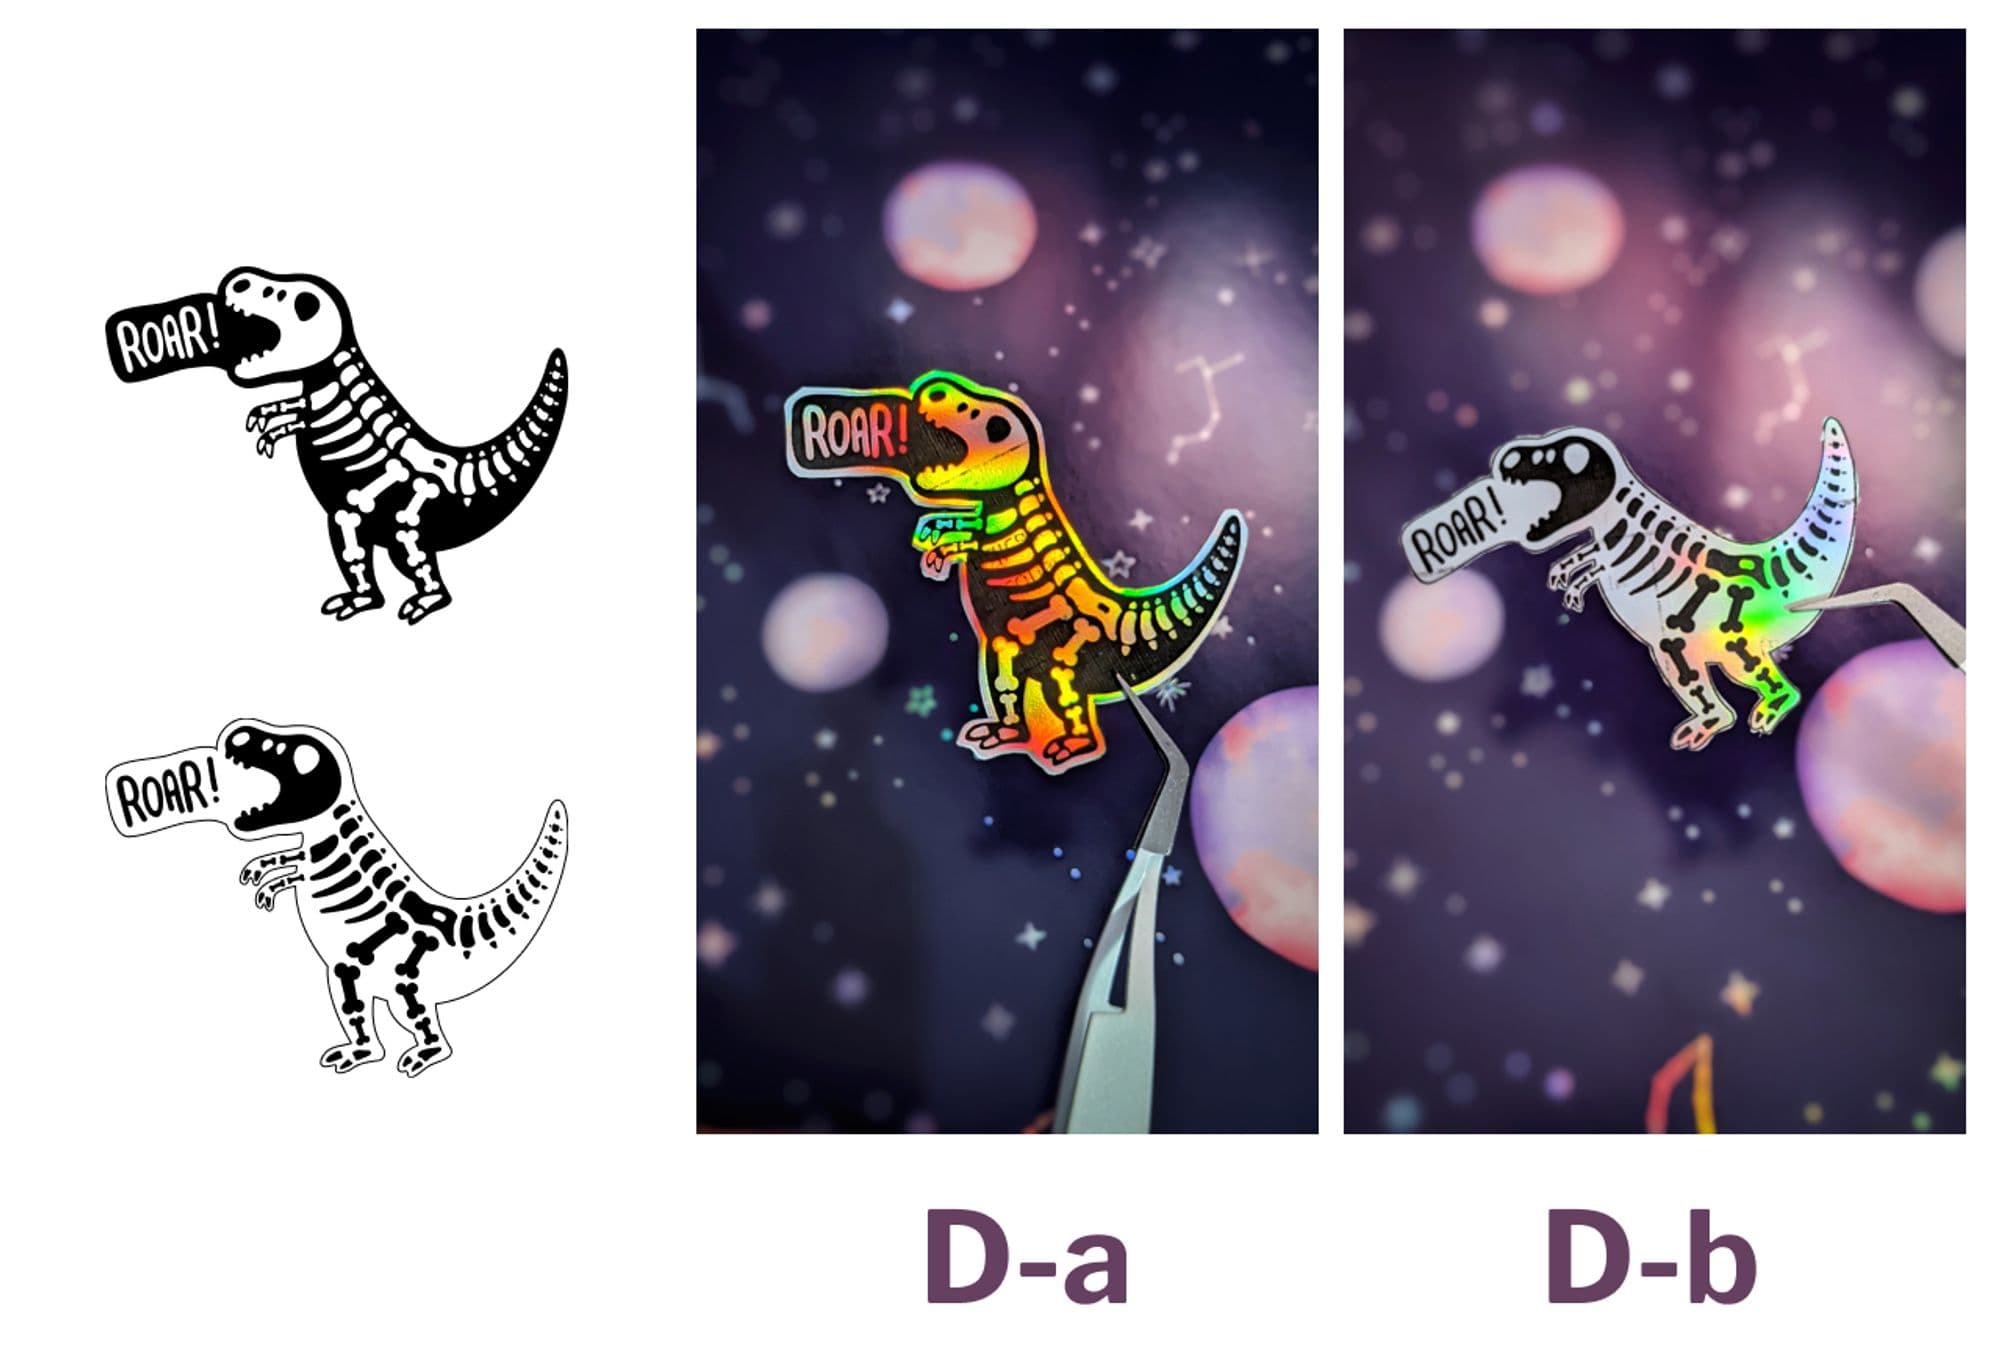 D-a: holographic dinosaur skeleton, black background D-b: holographic dinosaur background, black skelton Both say "Roar!"